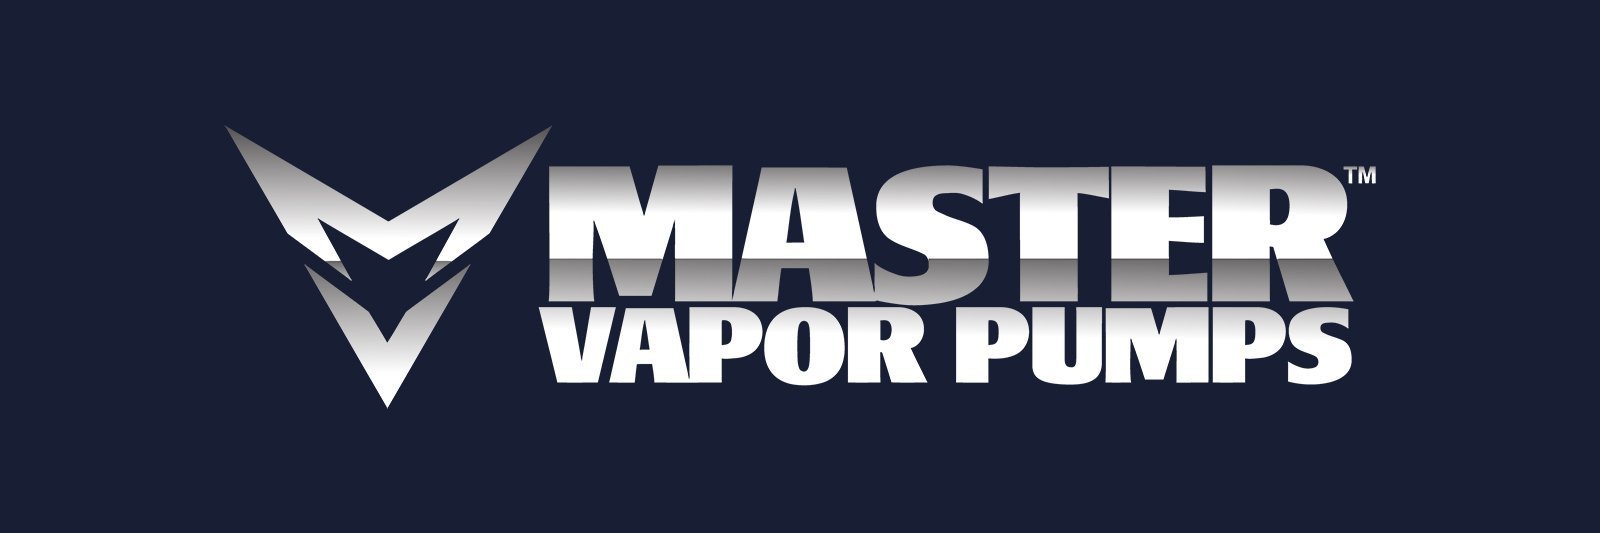 Master Vapor Pumps, Pump Part - MVP - 60 PSI, 150 PSI, & Liquid - SS&S - Fluid Plate Kit